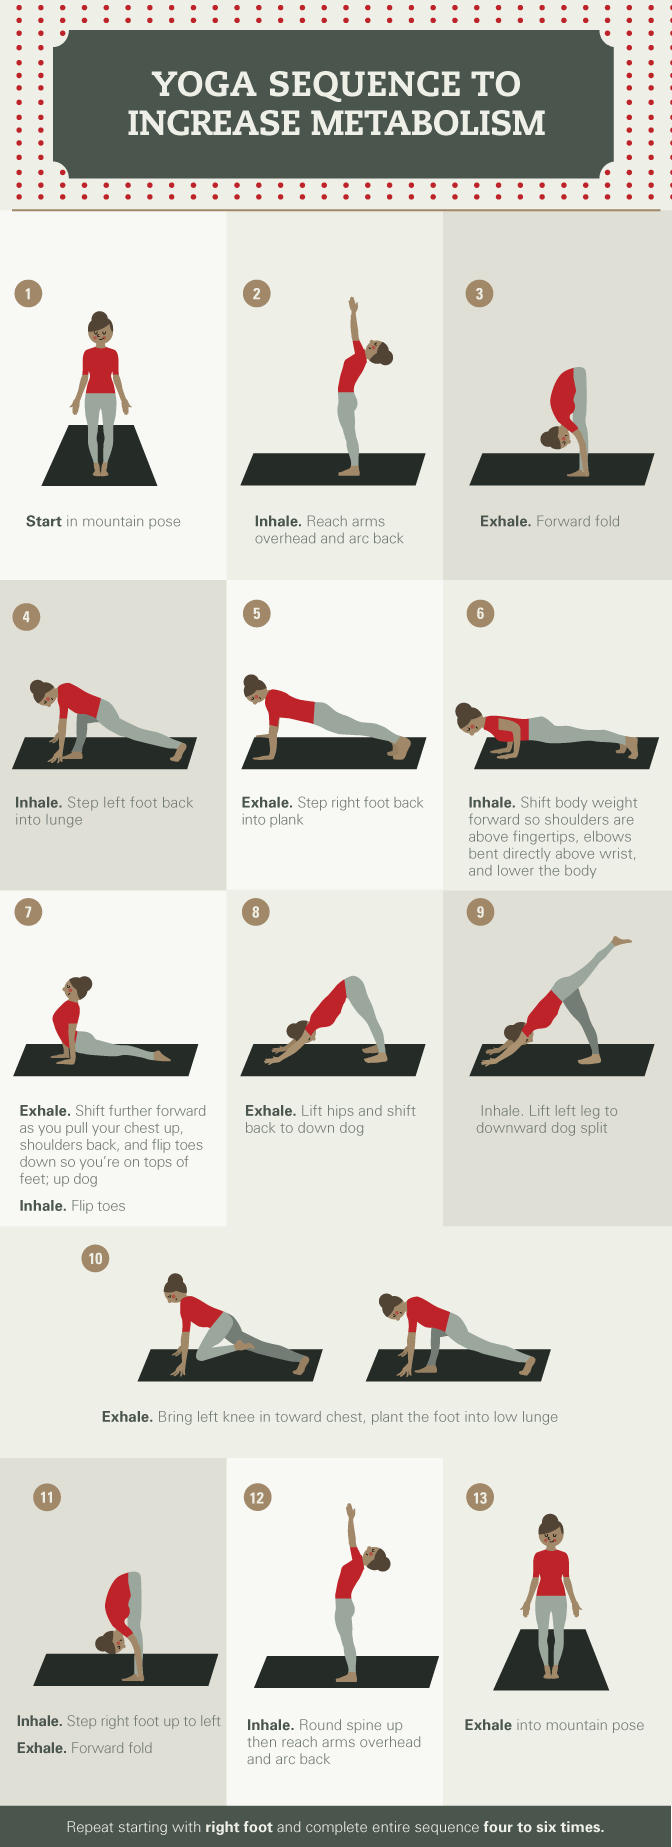 Yoga Poses for Metabolism